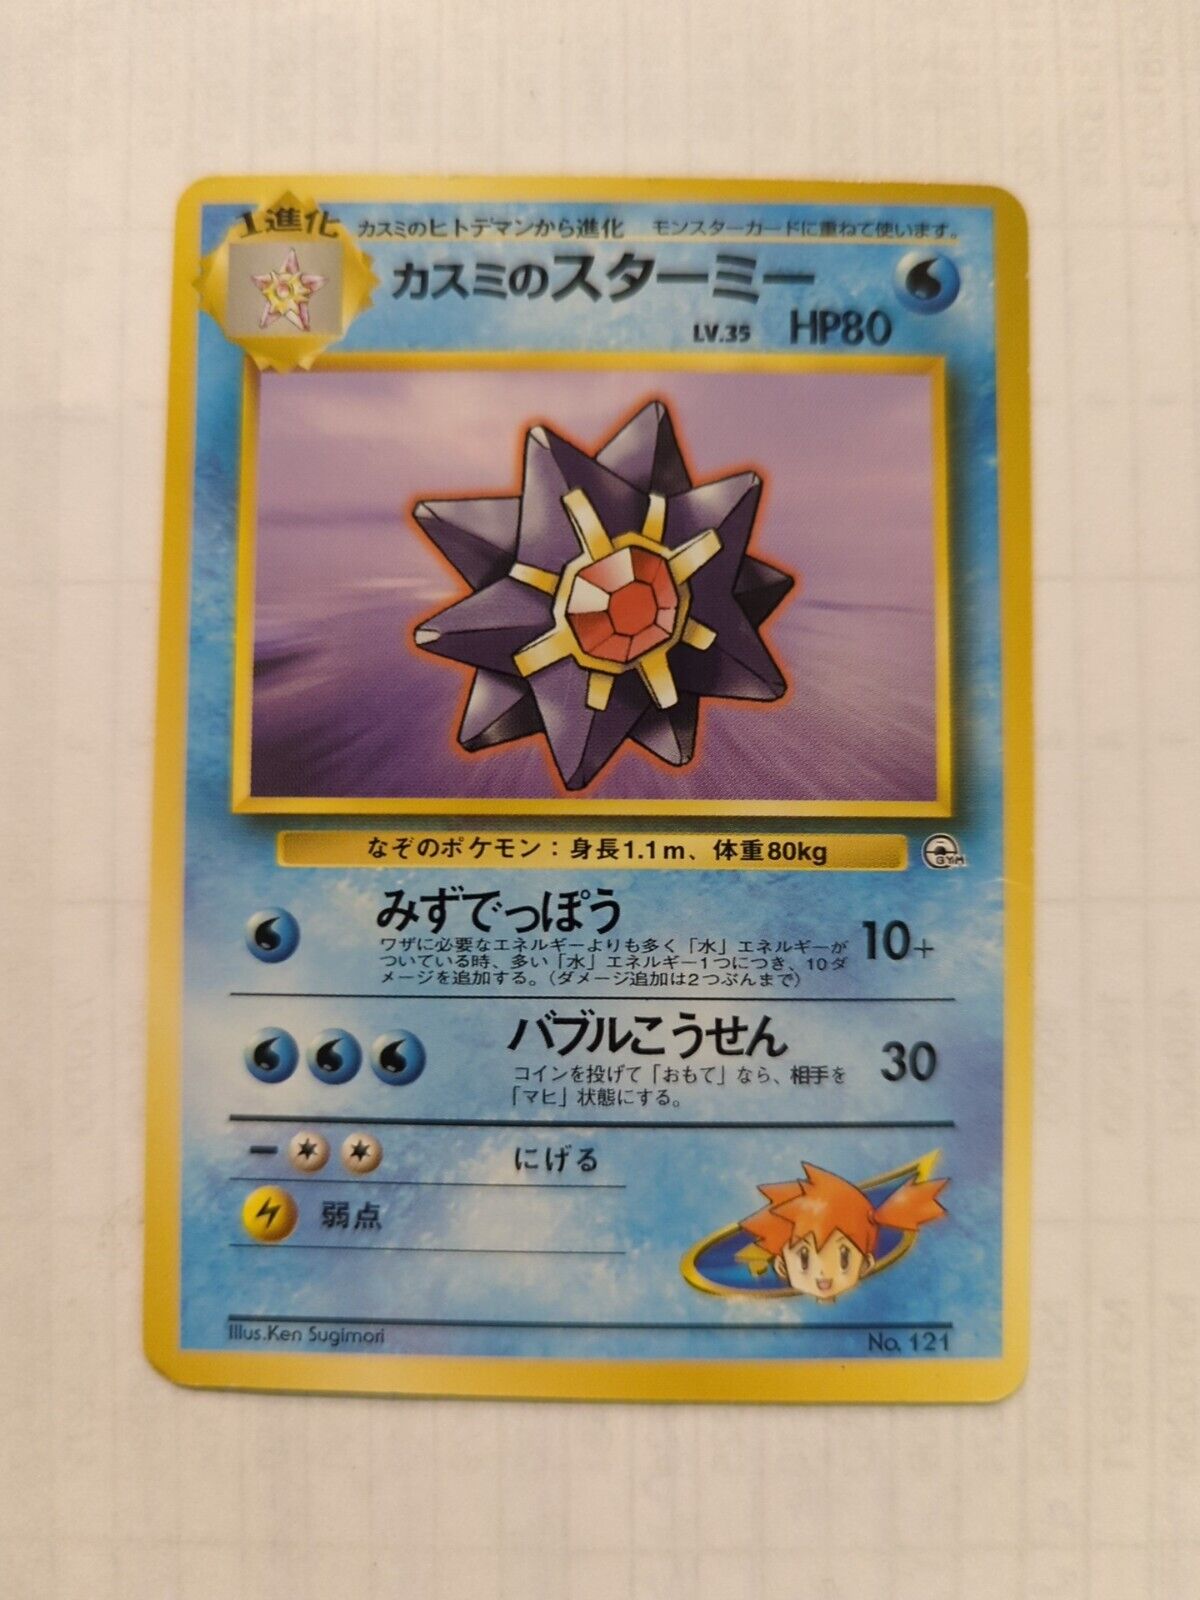 Misty's Starmie Japanese Gym Pokemon Card, Old Back US seller